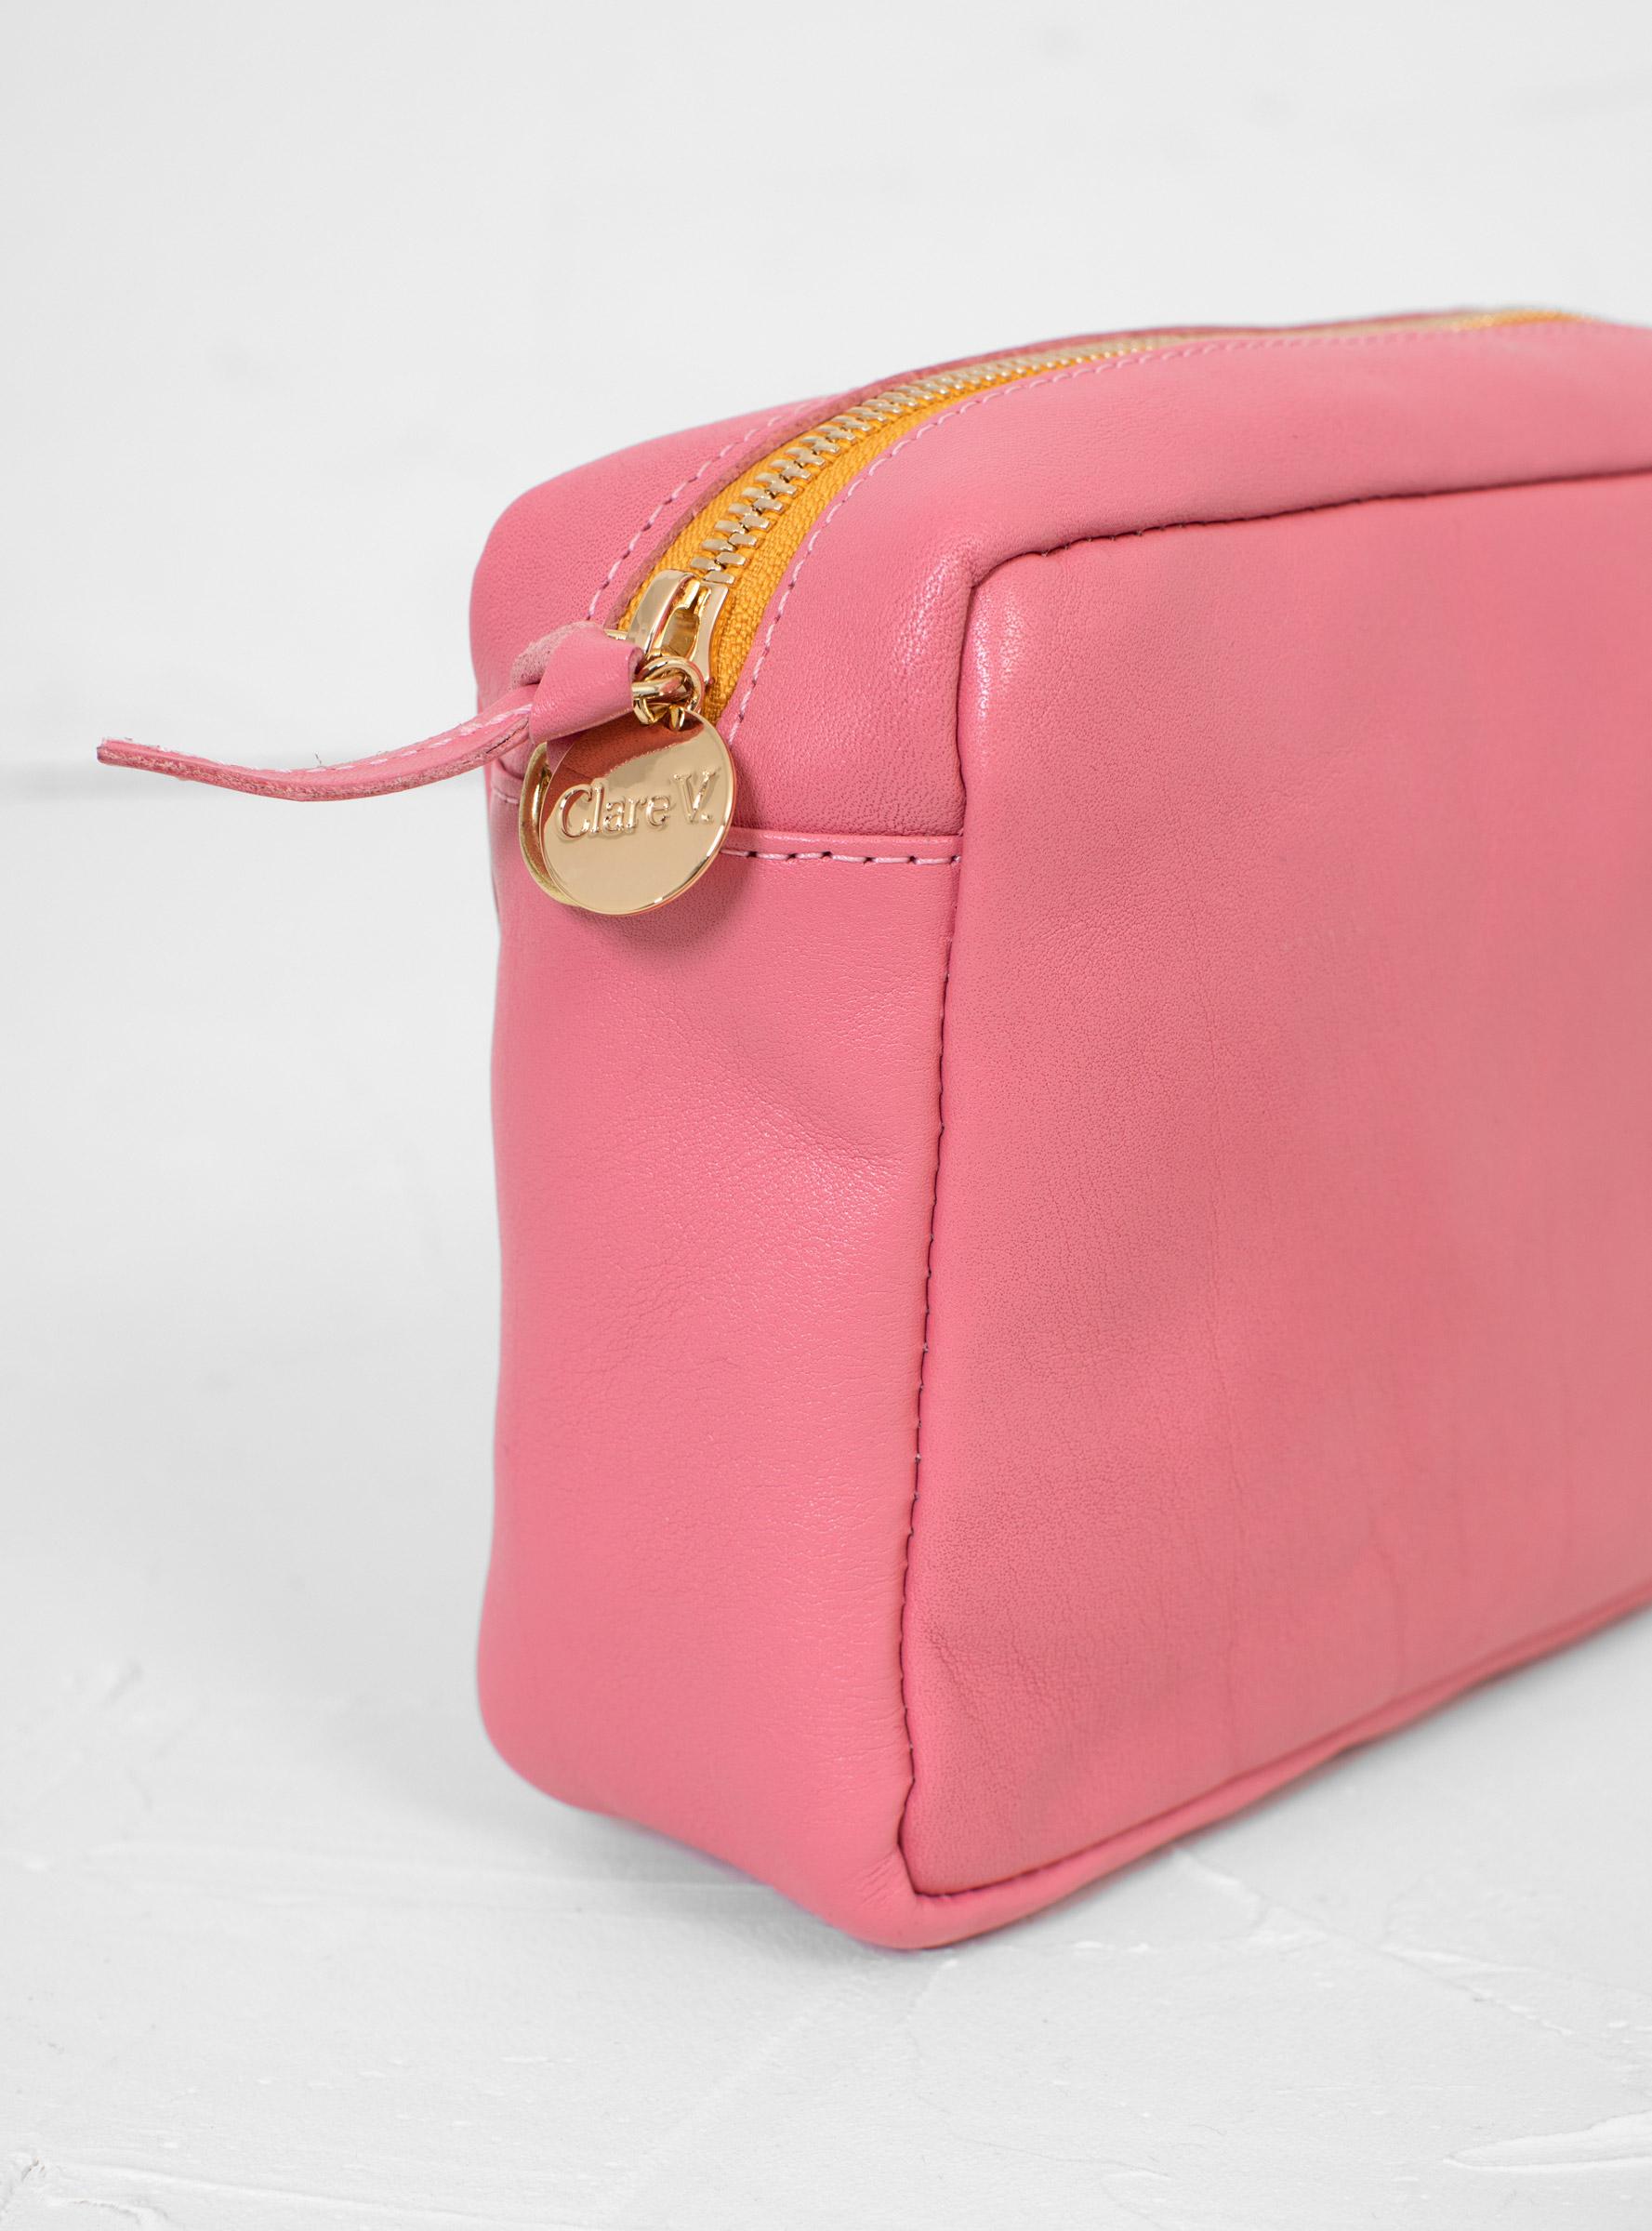 Clare V. Canvas Bag Strap - Pink Bag Accessories, Accessories - W2432238